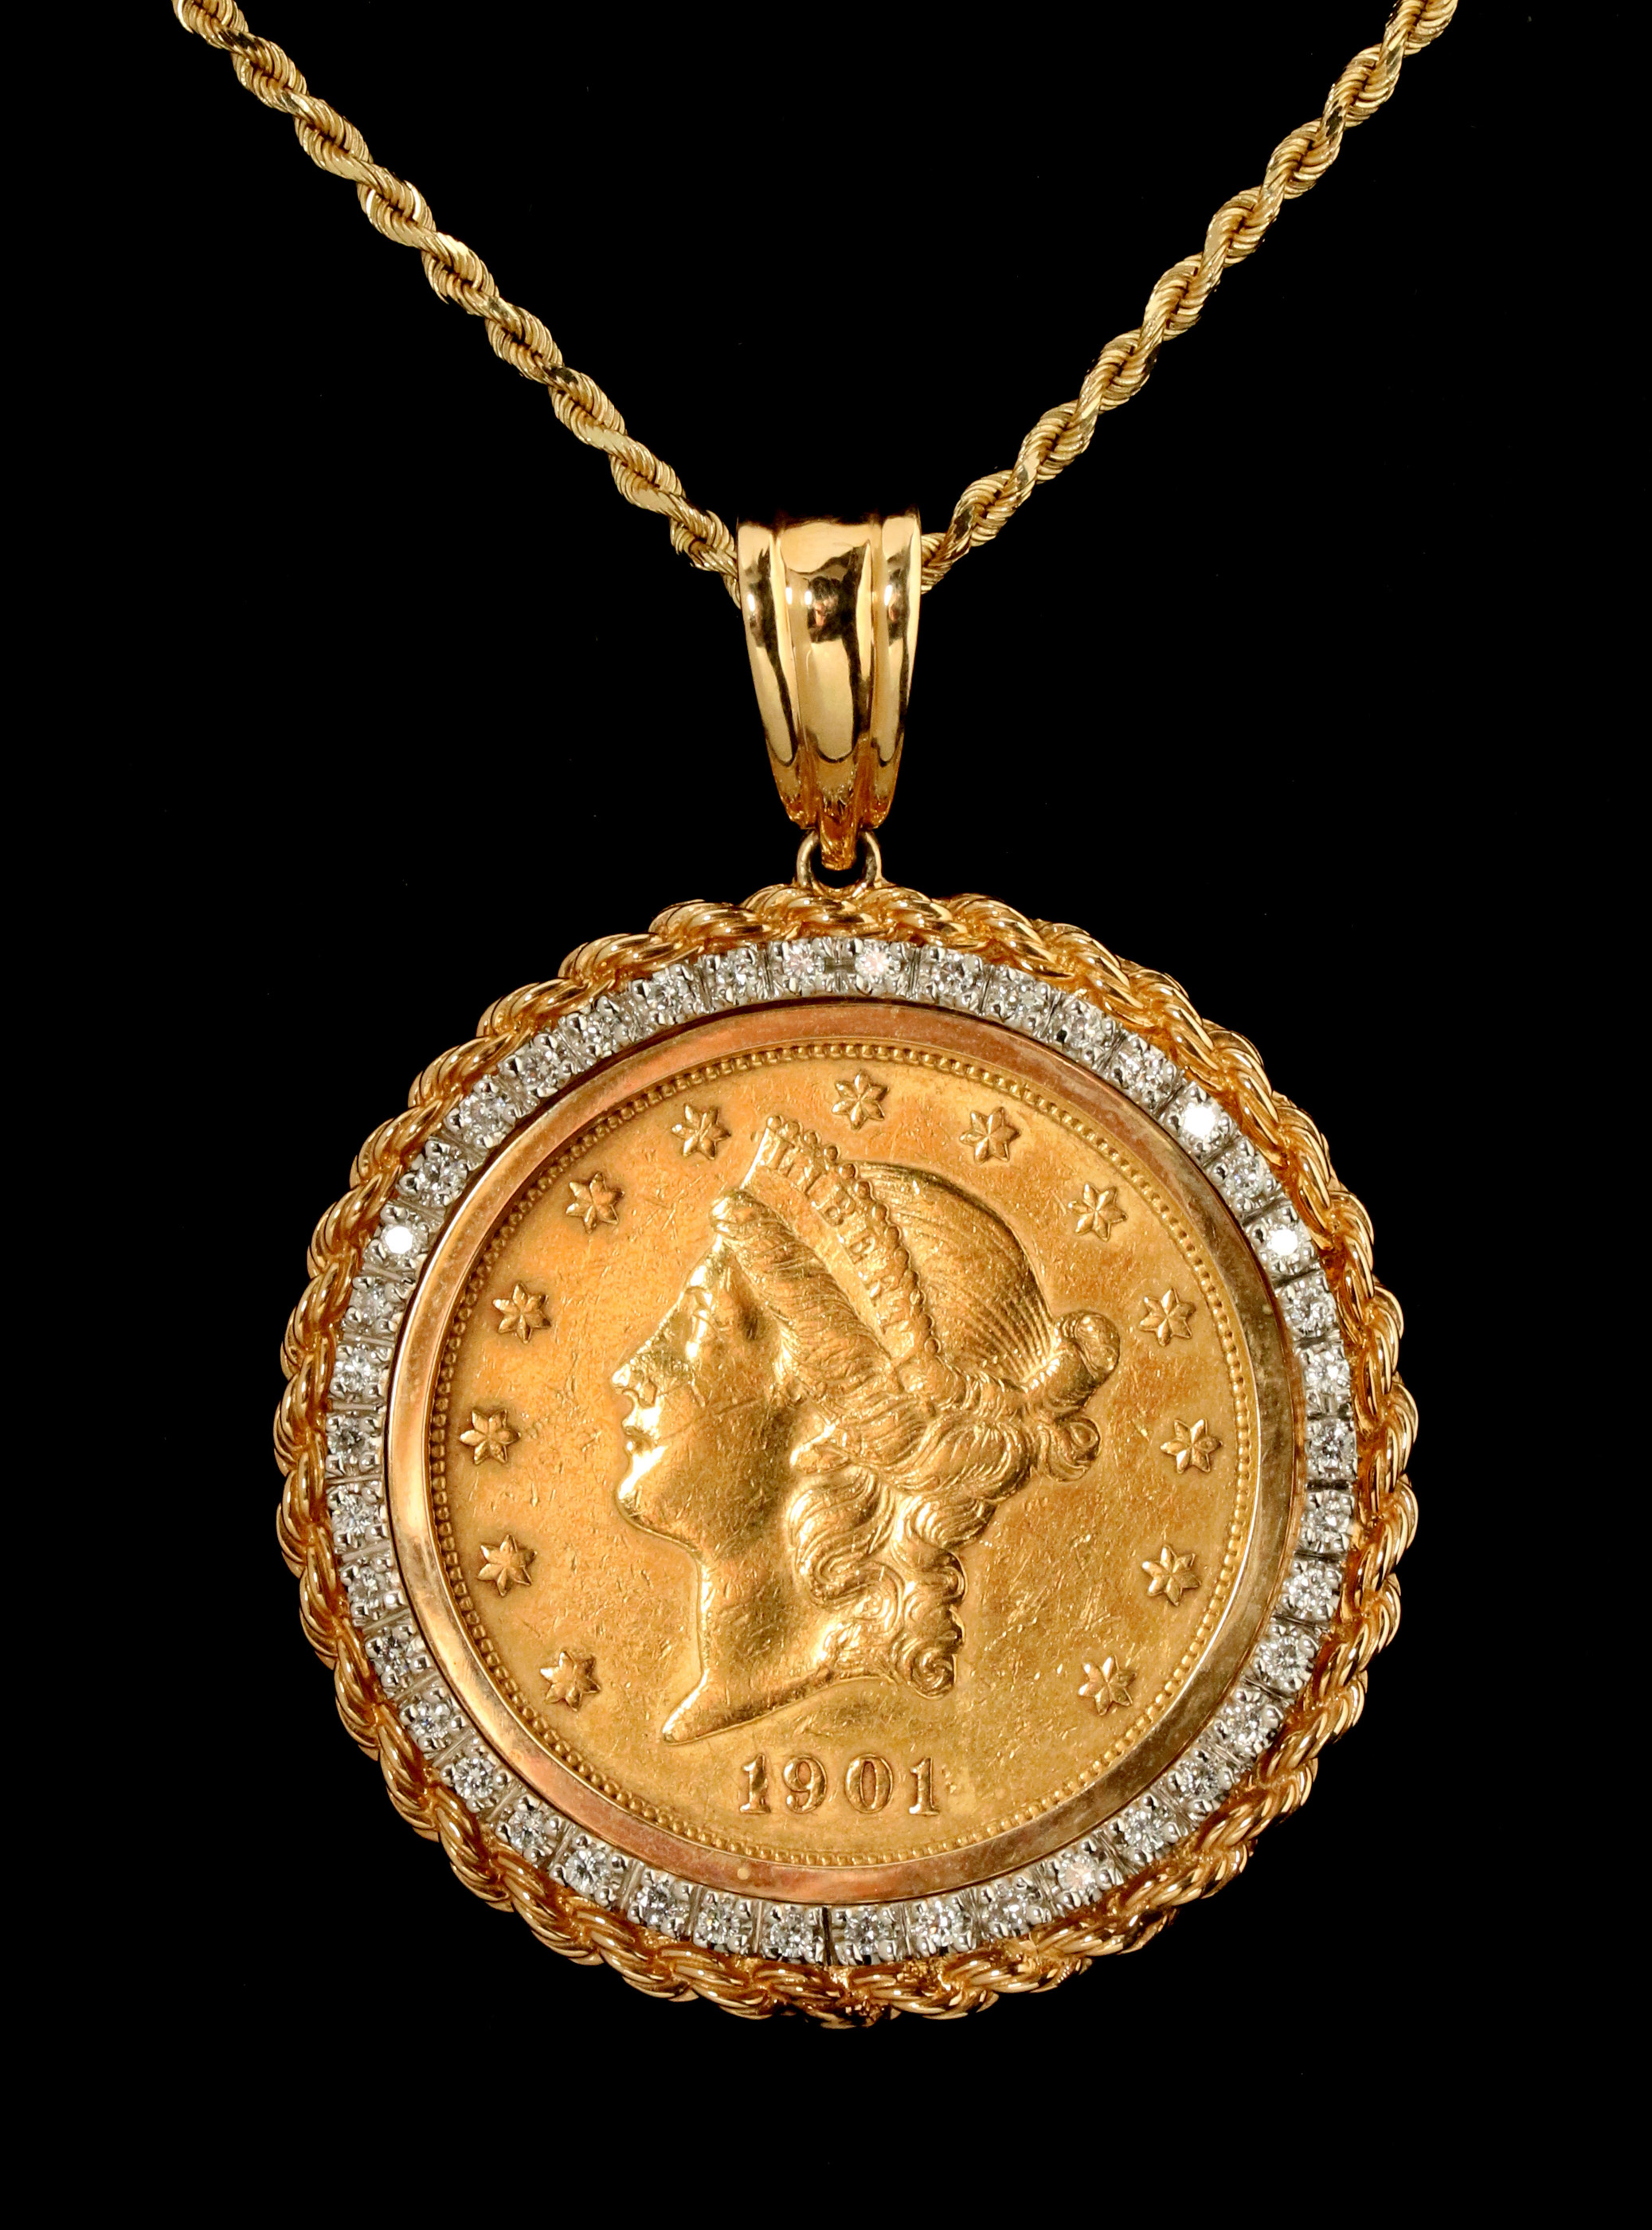 A $20 LIBERTY U.S. GOLD COIN IN DIAMOND SET BEZEL